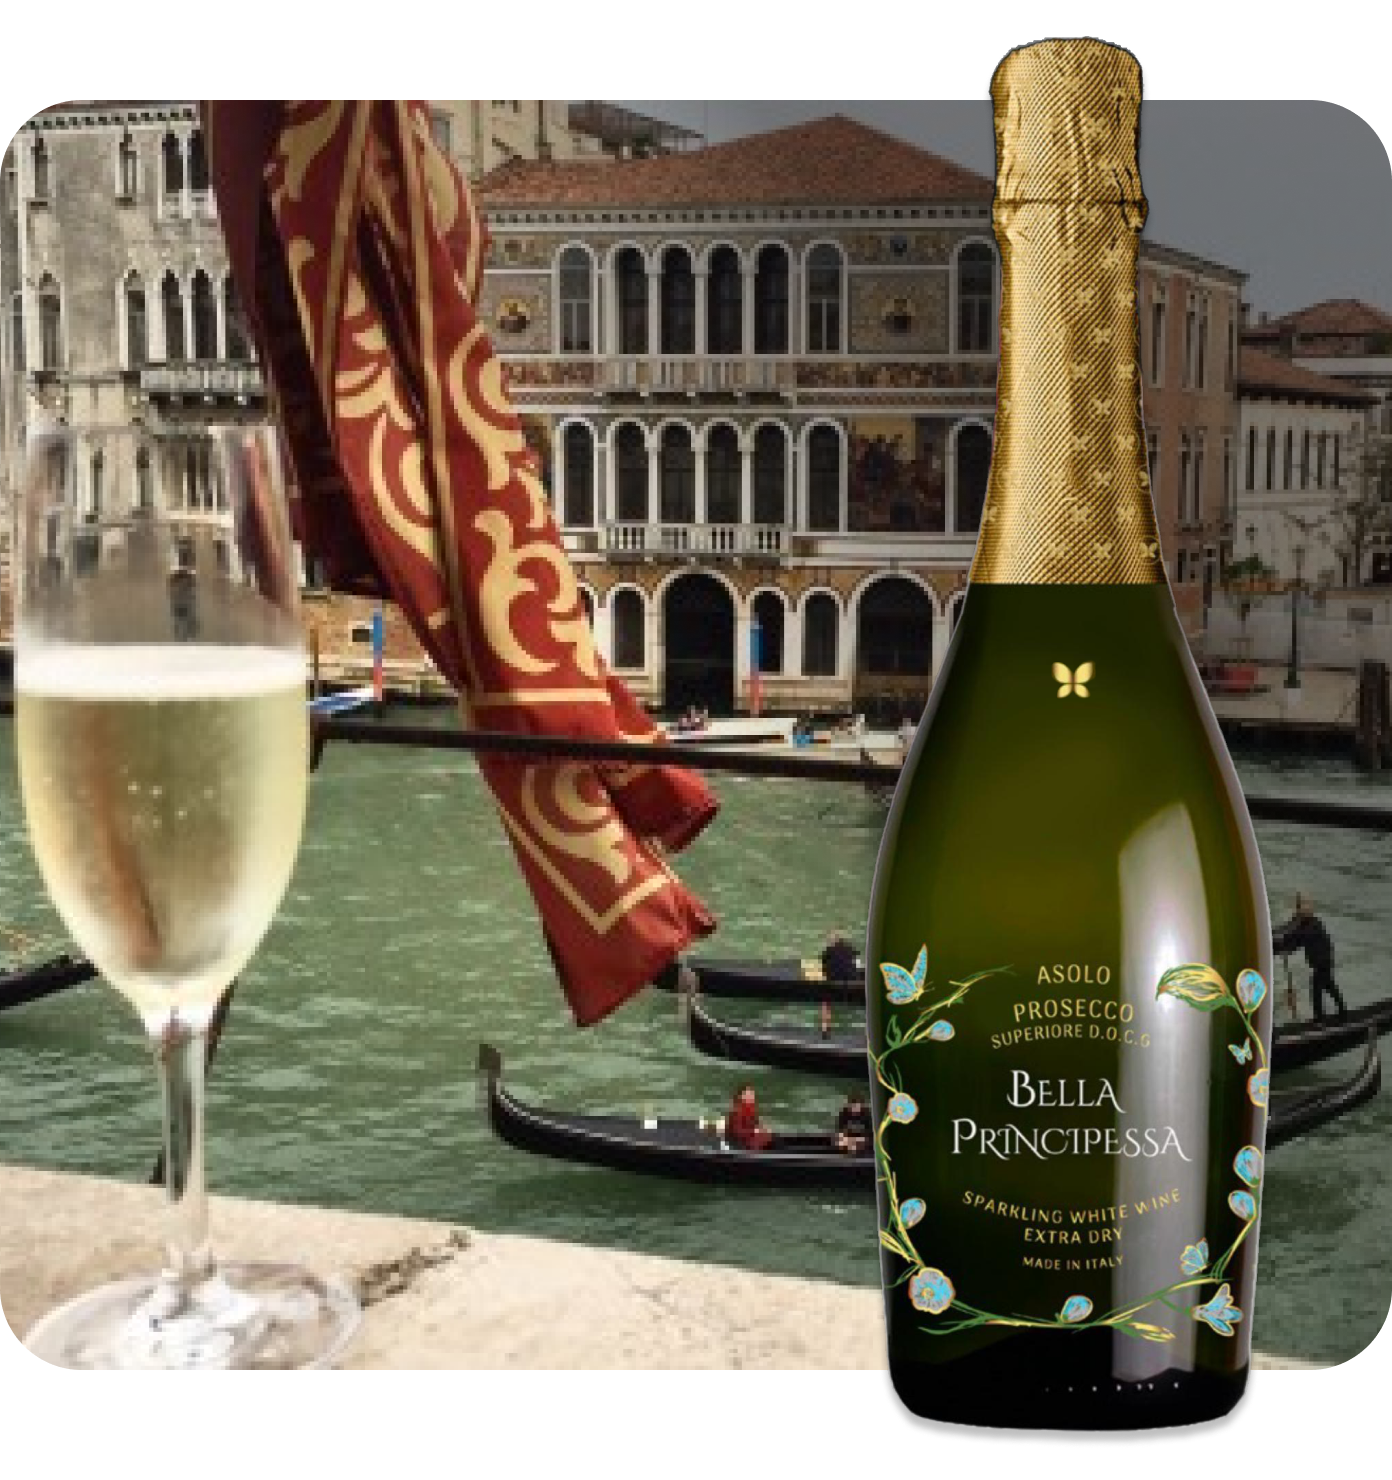 Bottle of Bella Principessa premium Prosecco with the brand's logo and name.